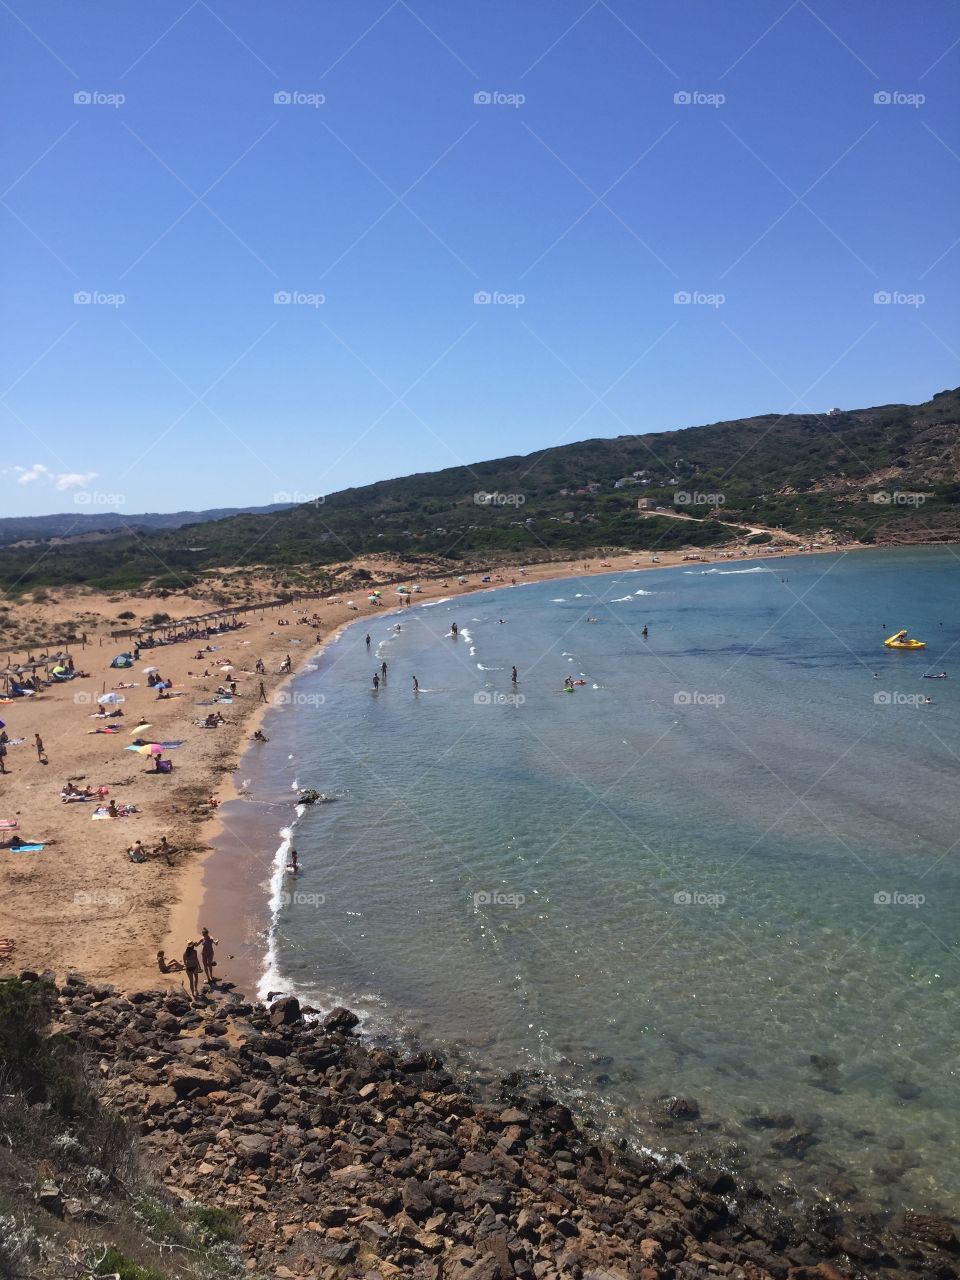 Fornells beach in Menorca the island